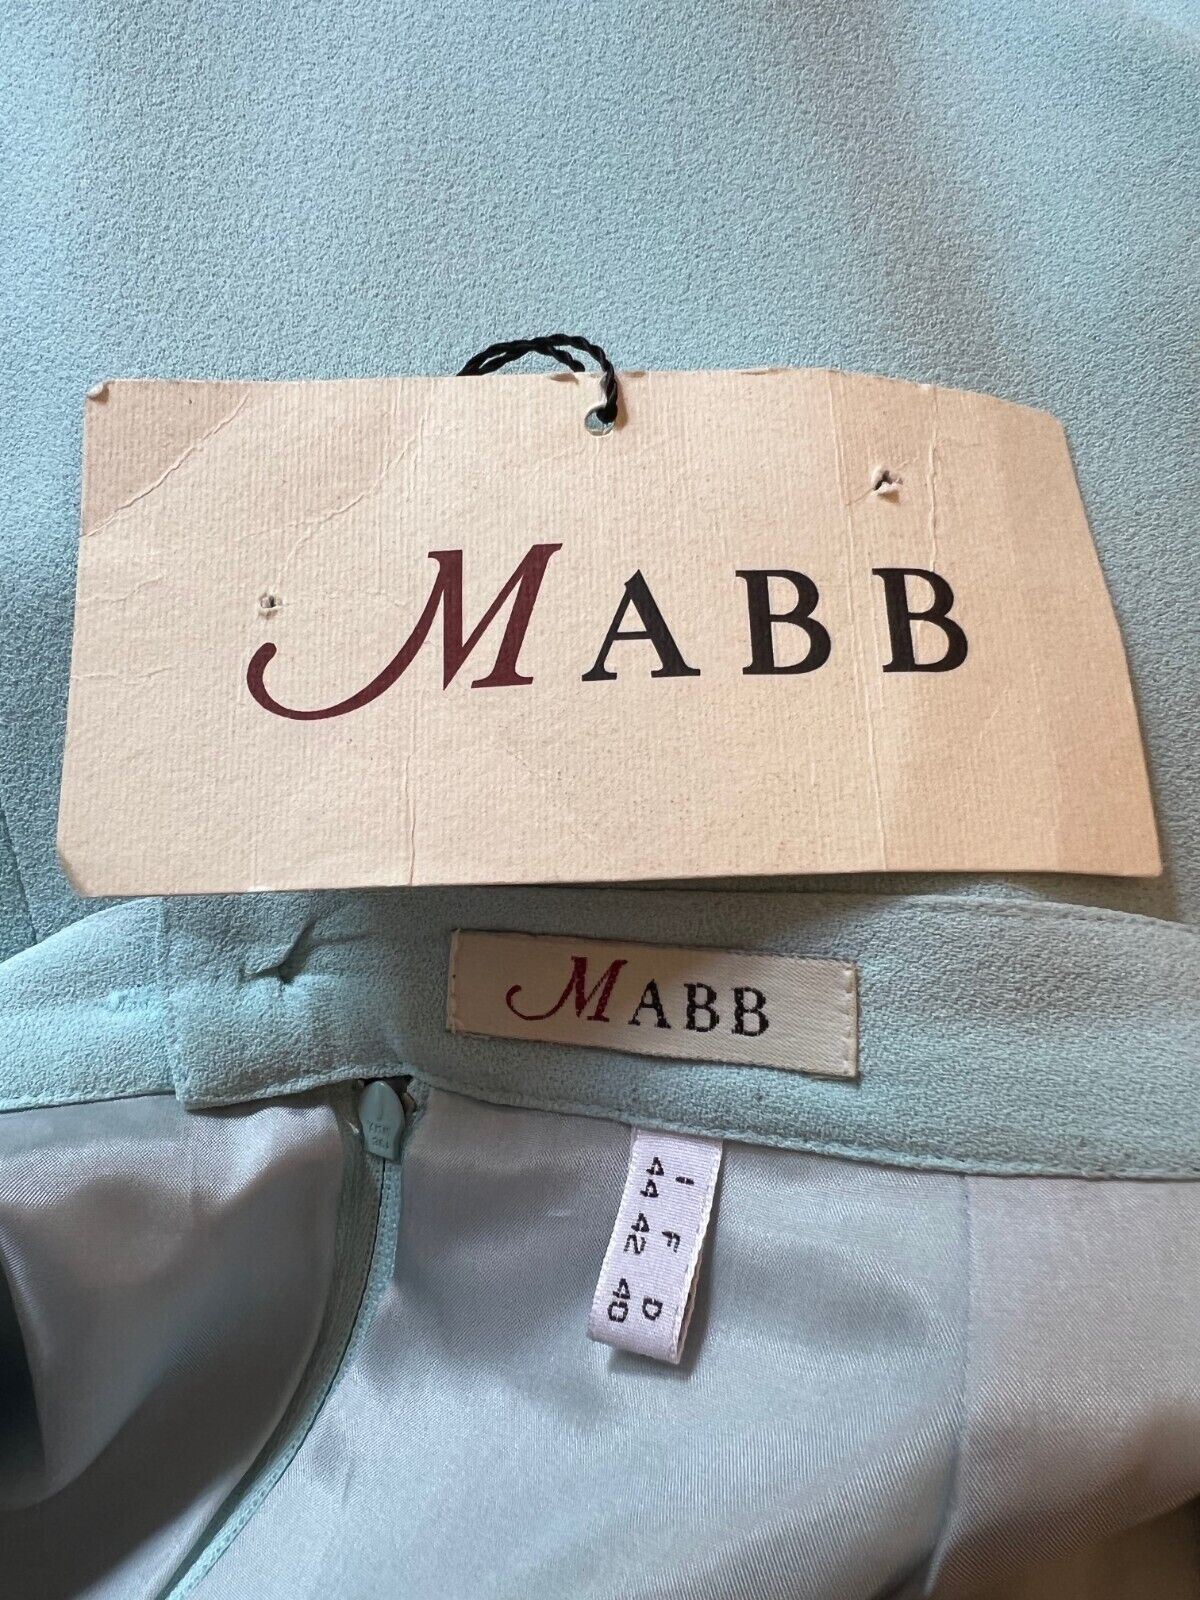 Mabb Vintage Baby Blue Crepe Summer Pencil Skirt UK 10 US 6 EU 38 BNWT Timeless Fashions